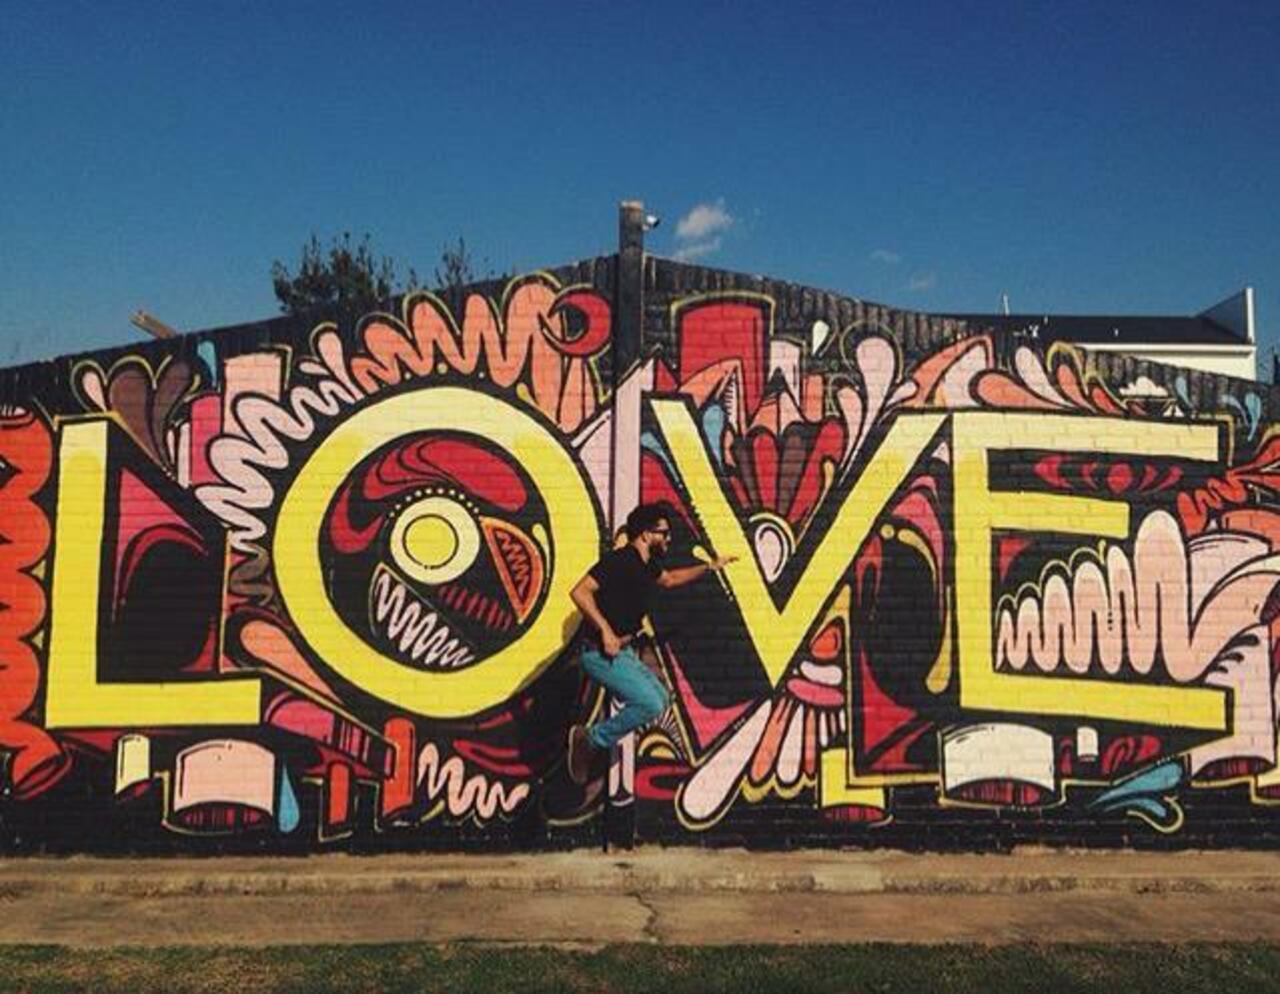 RT belilac "Love ❤️
Street Art by WileyArt

#art #graffiti #mural #streetart http://t.co/1qFfKLruyG"